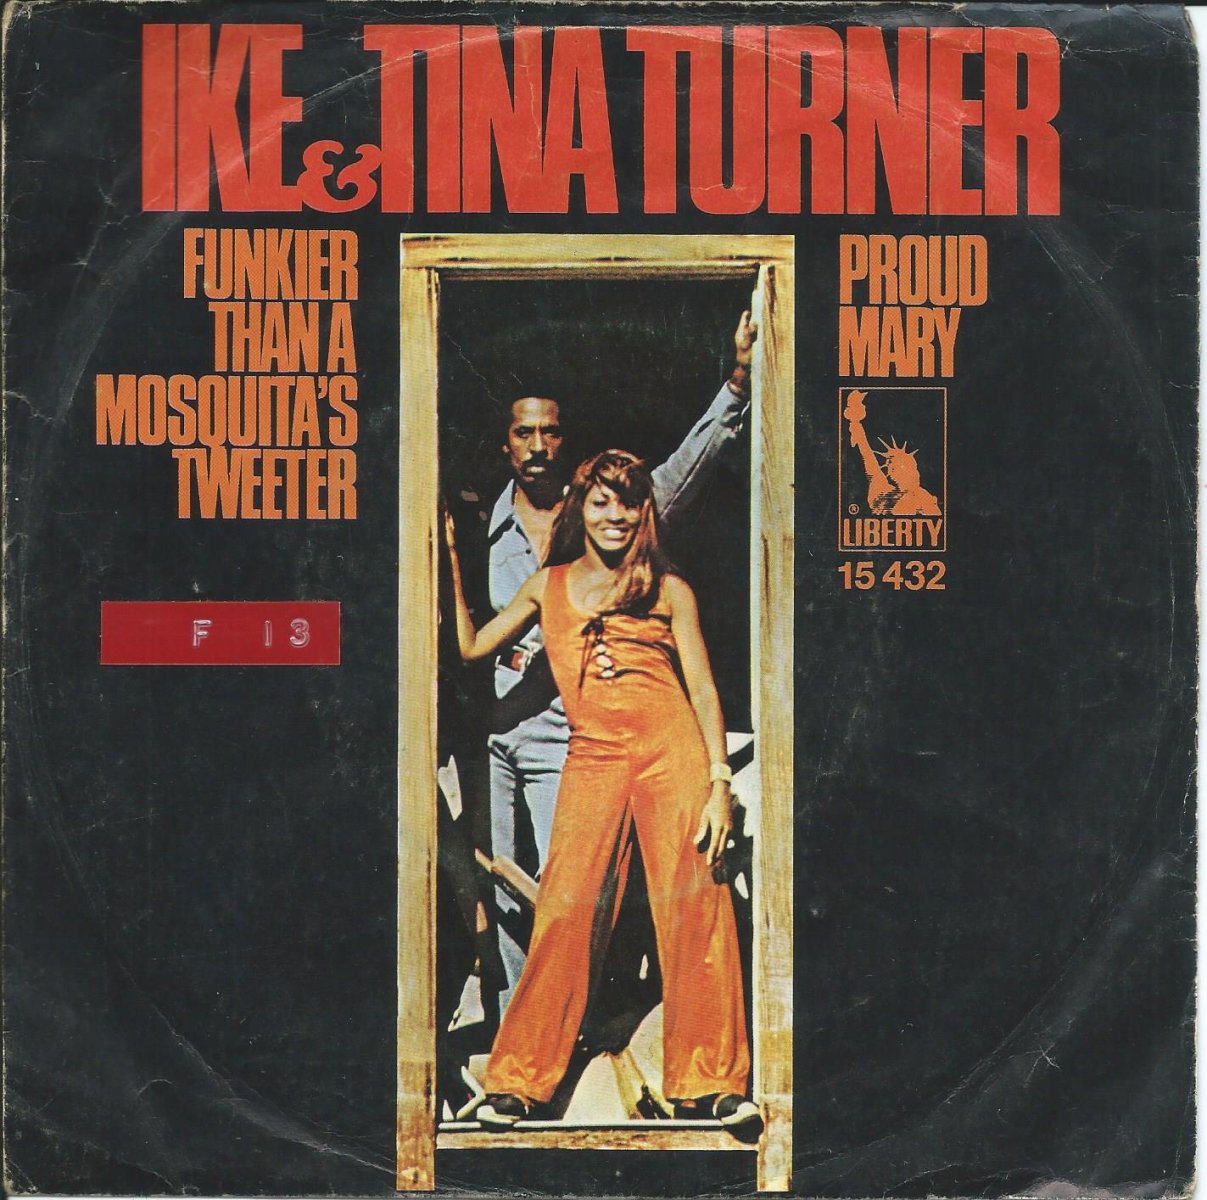 IKE & TINA TURNER / PROUD MARY / FUNKIER THAN A MOSQUITA'S TWEETER (7